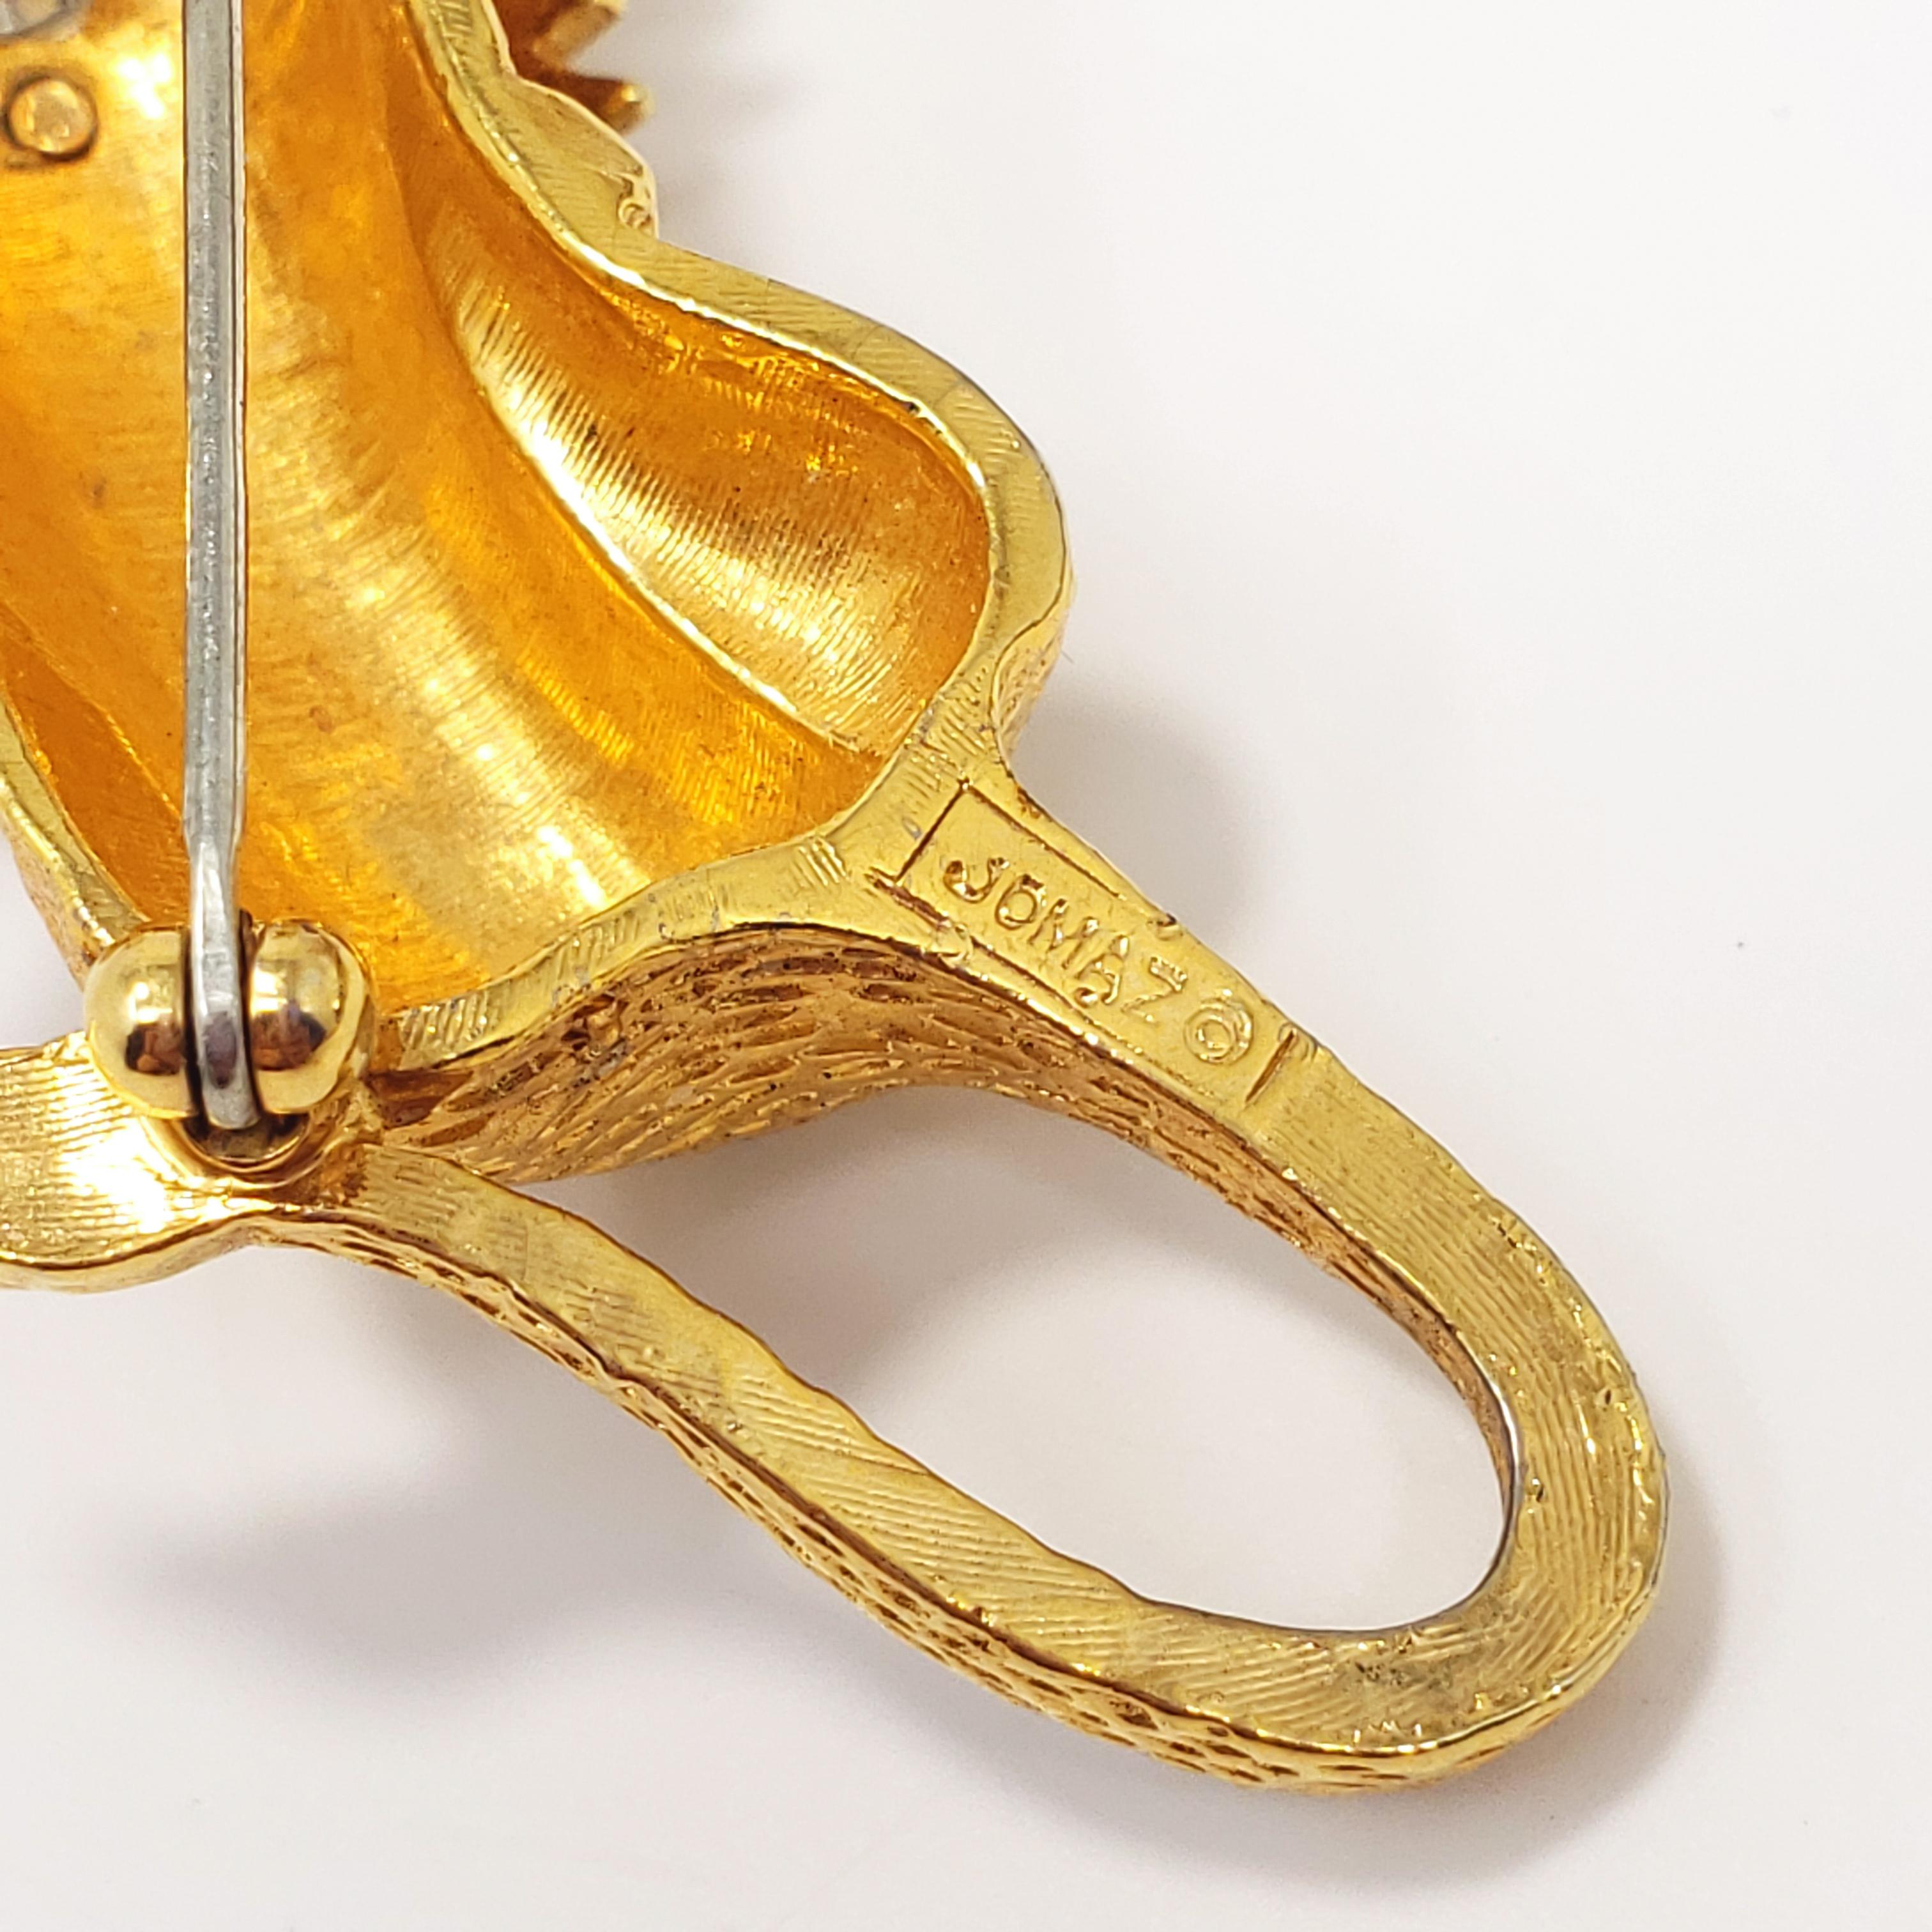 Women's Vintage Jomaz Textured Lion Pin Brooch in Gold